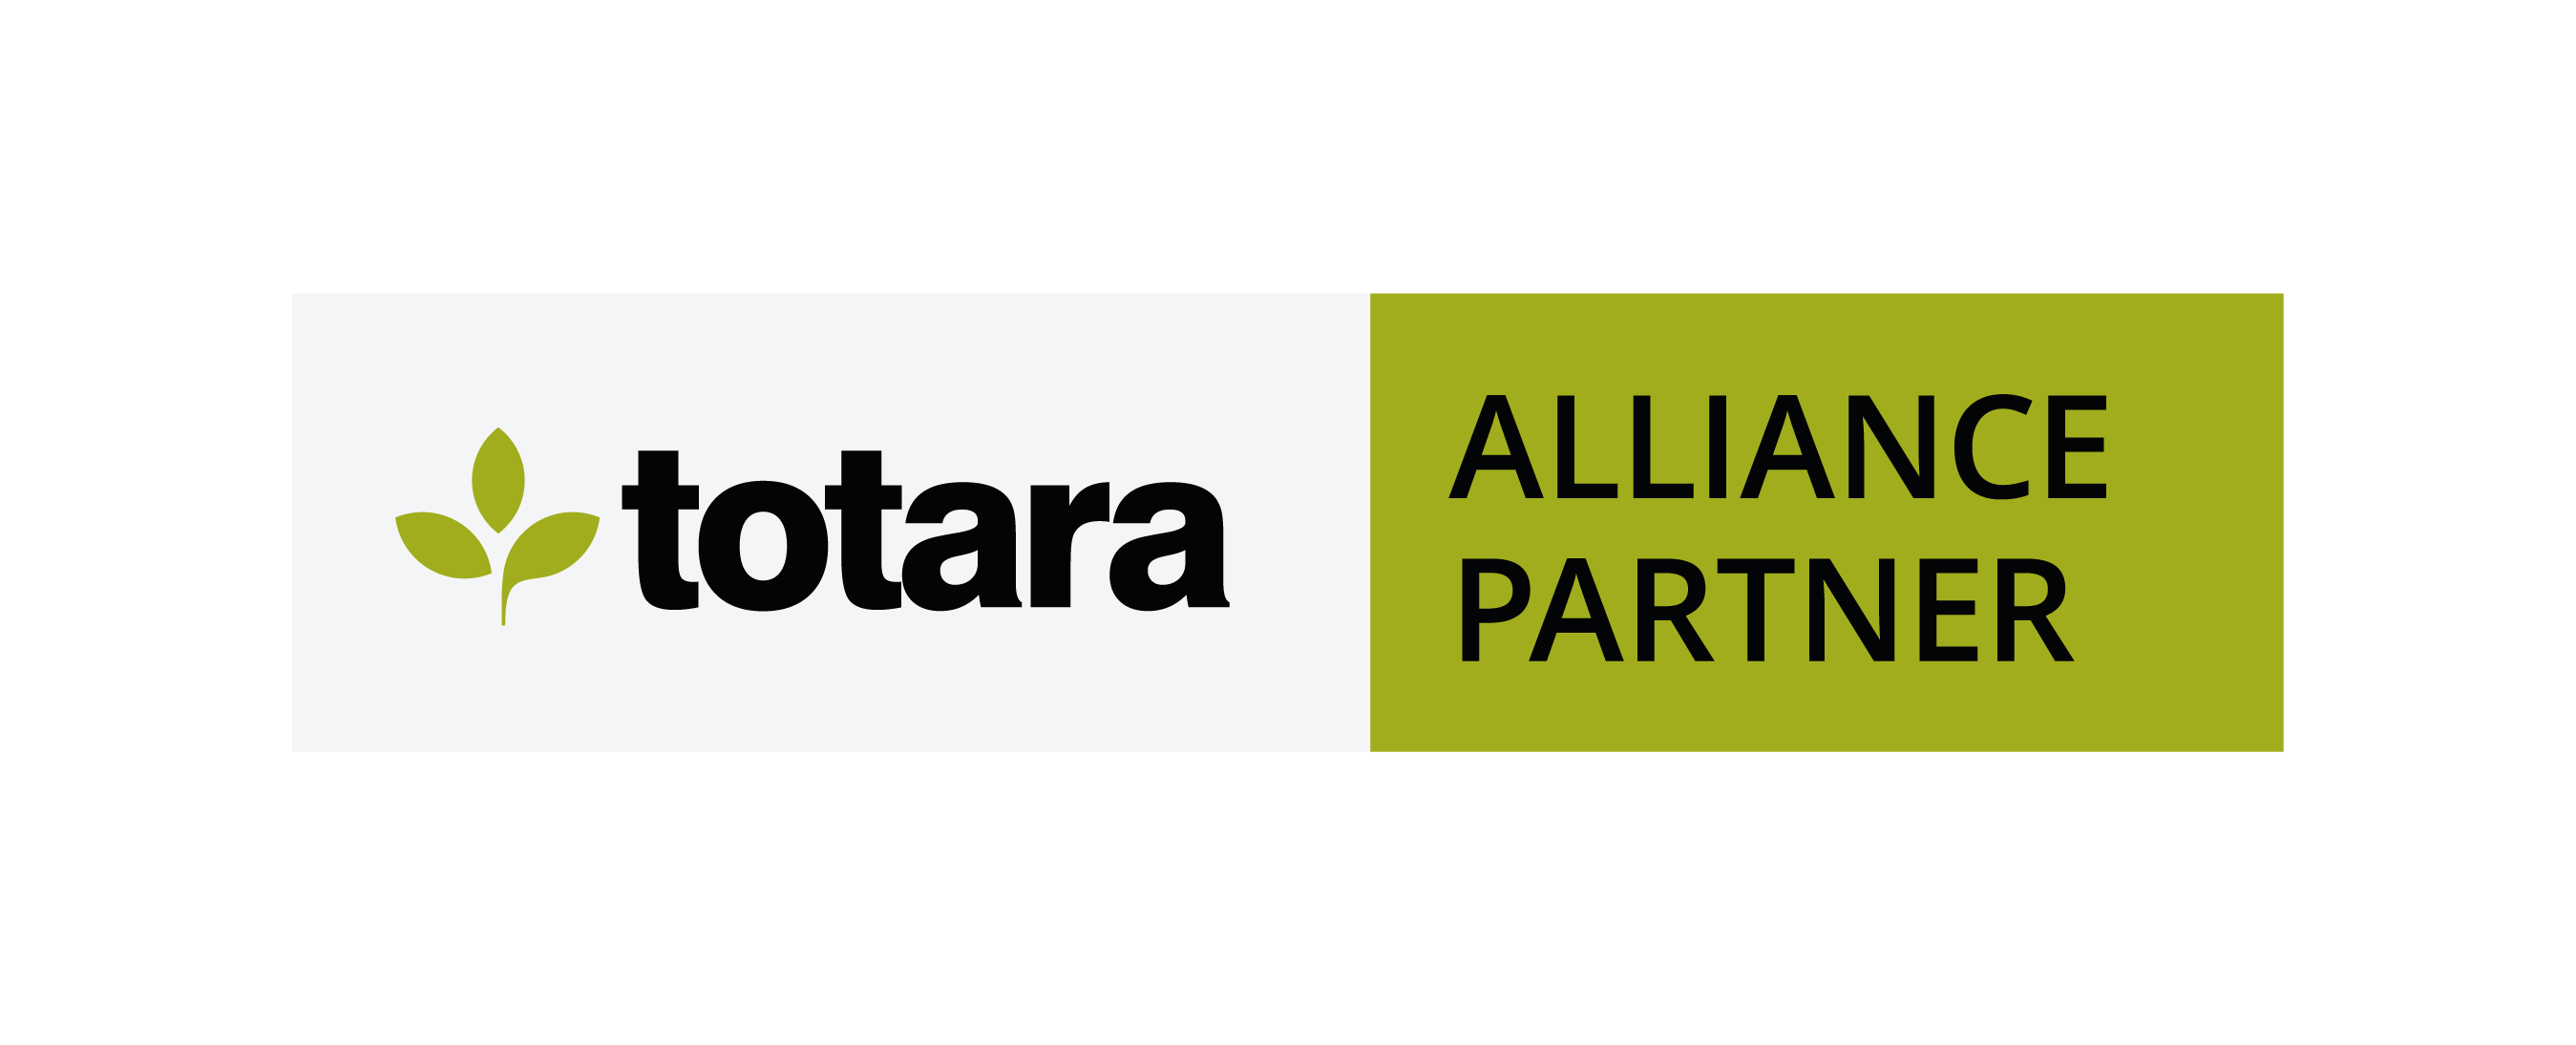 Totara Alliance Partner Status Logo Landscape